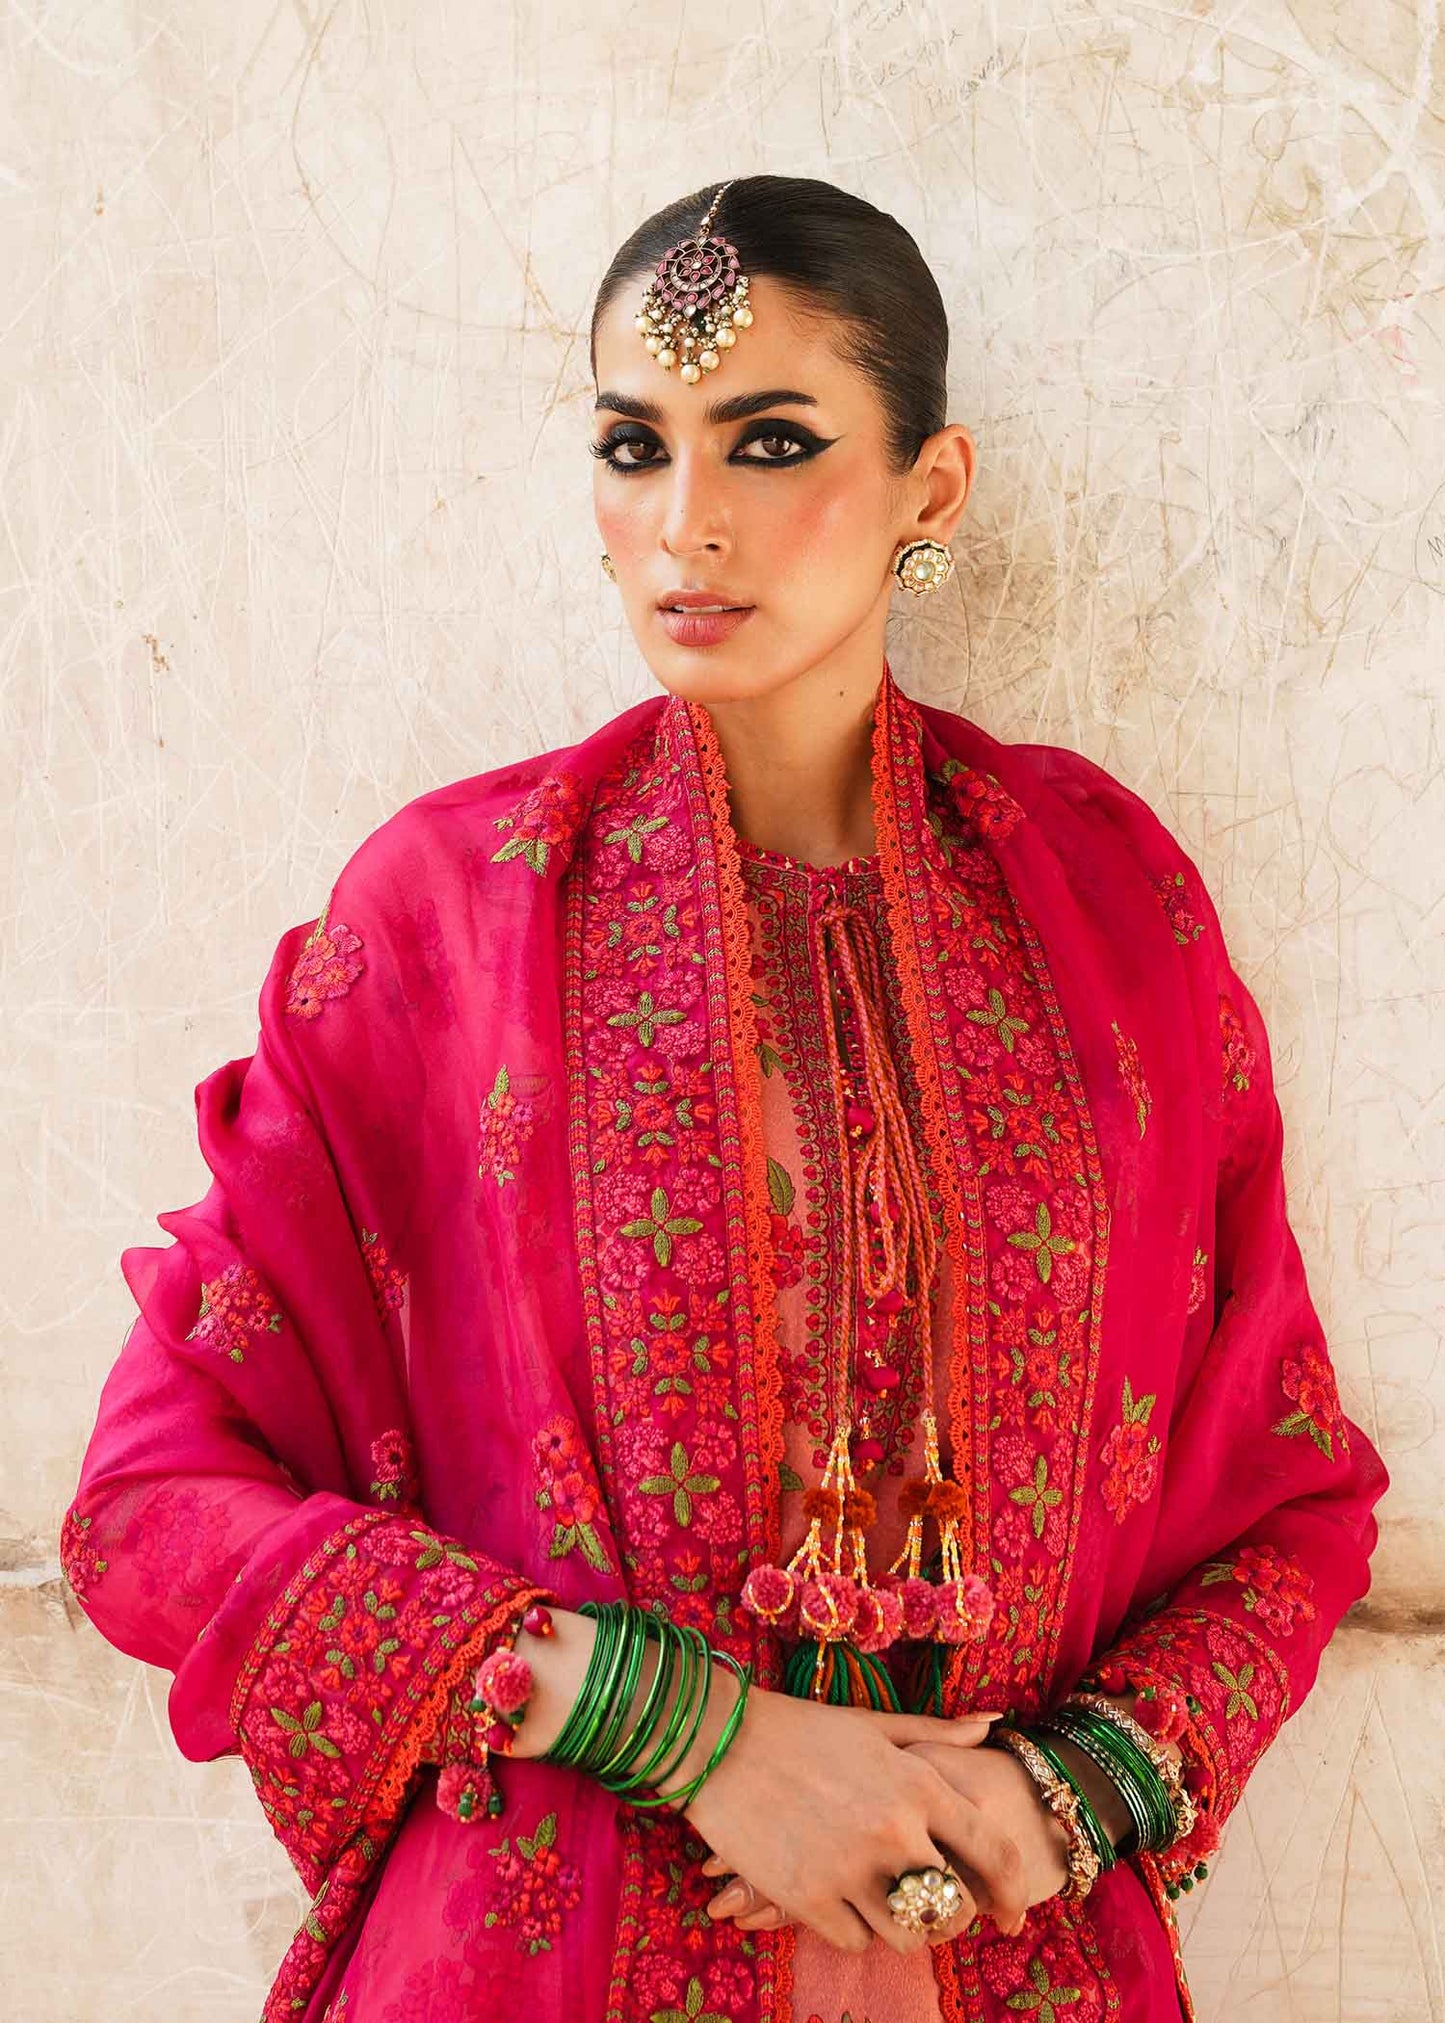 Buy Now, Tulip - Karandi AW 2023 - Hussain Rehar - Fall Edition - Shahana Collection UK - Winter 2023 - Wedding and Bridal Party Dresses - Pakistani Designer Dresses in UK - Shahana UK 